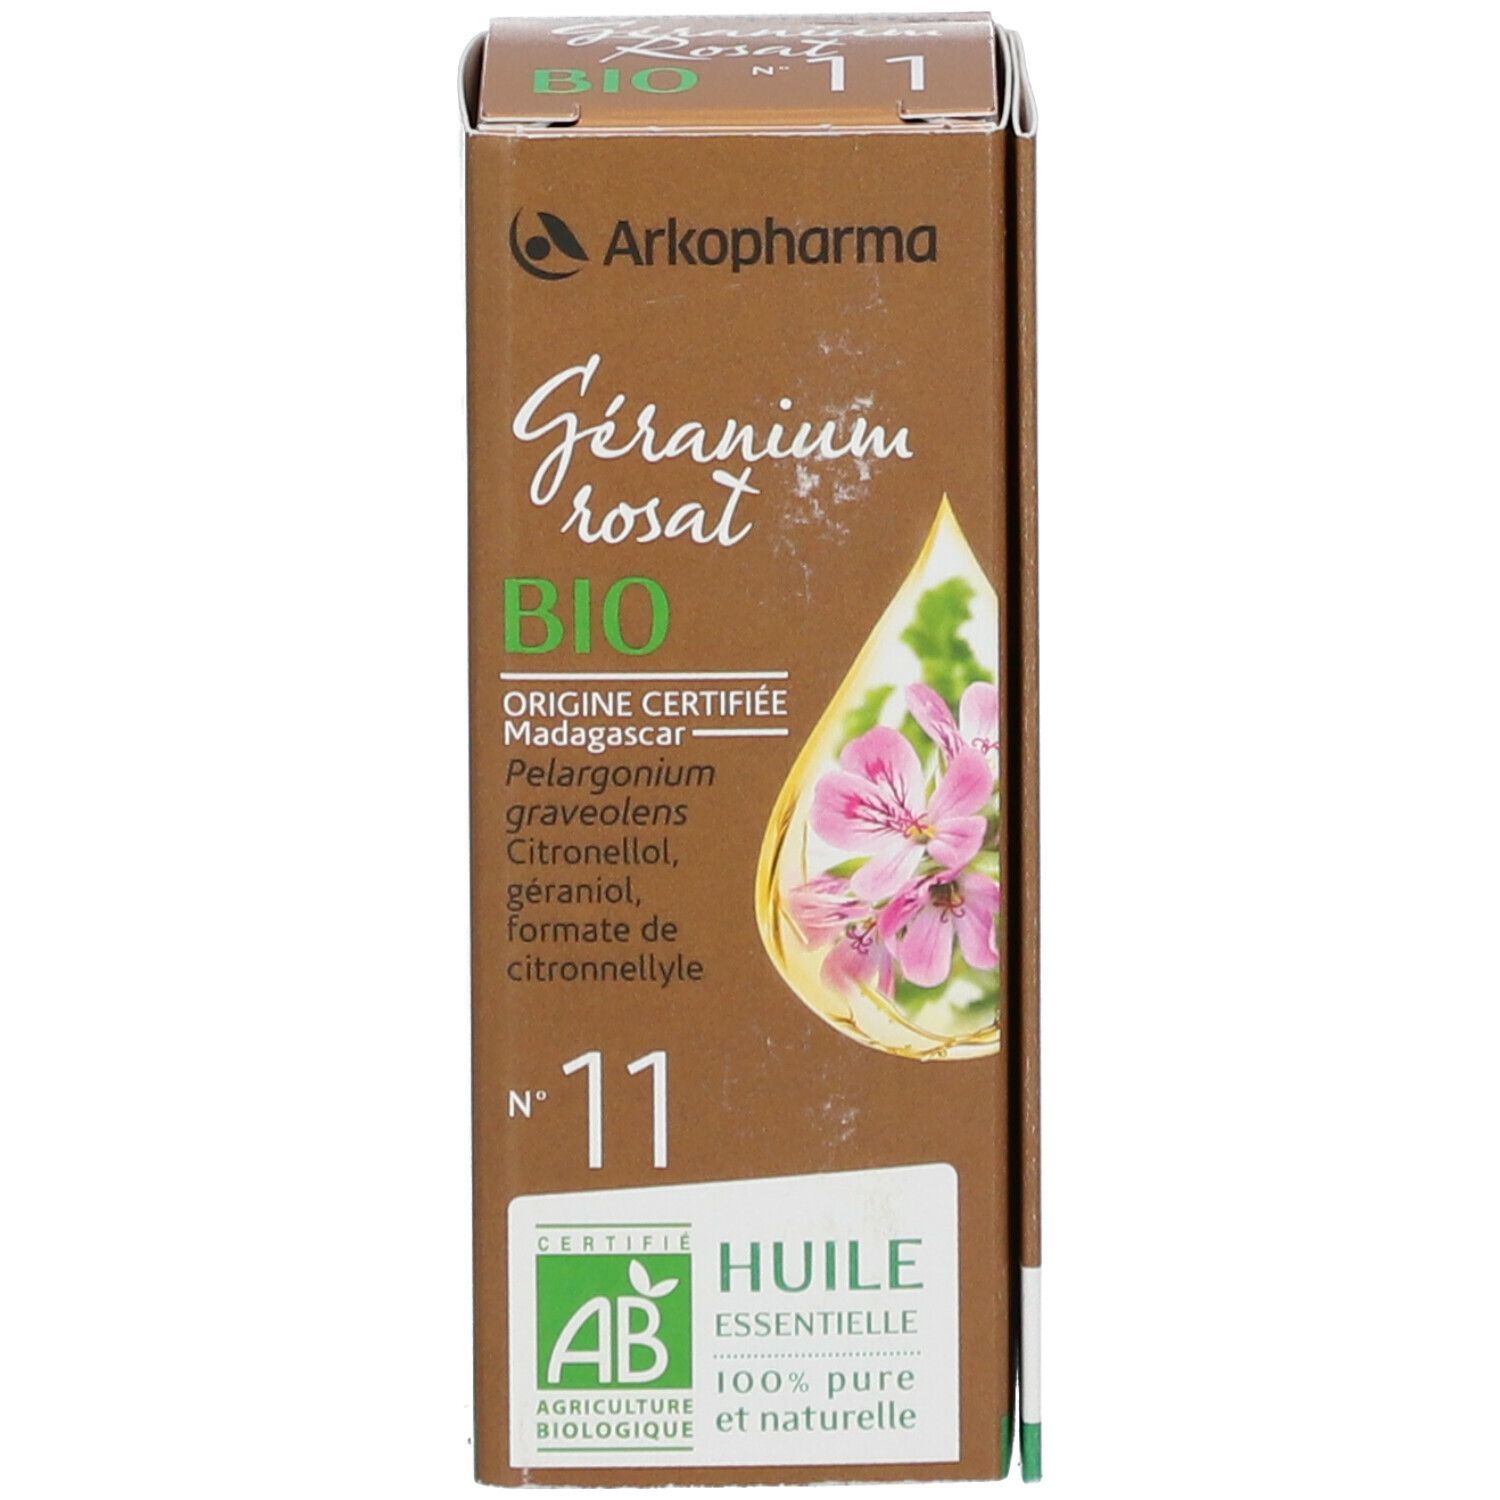 ARKOPHARMA OLFAE® N°11 Huile Essentielle de Gréranium rosat Bio